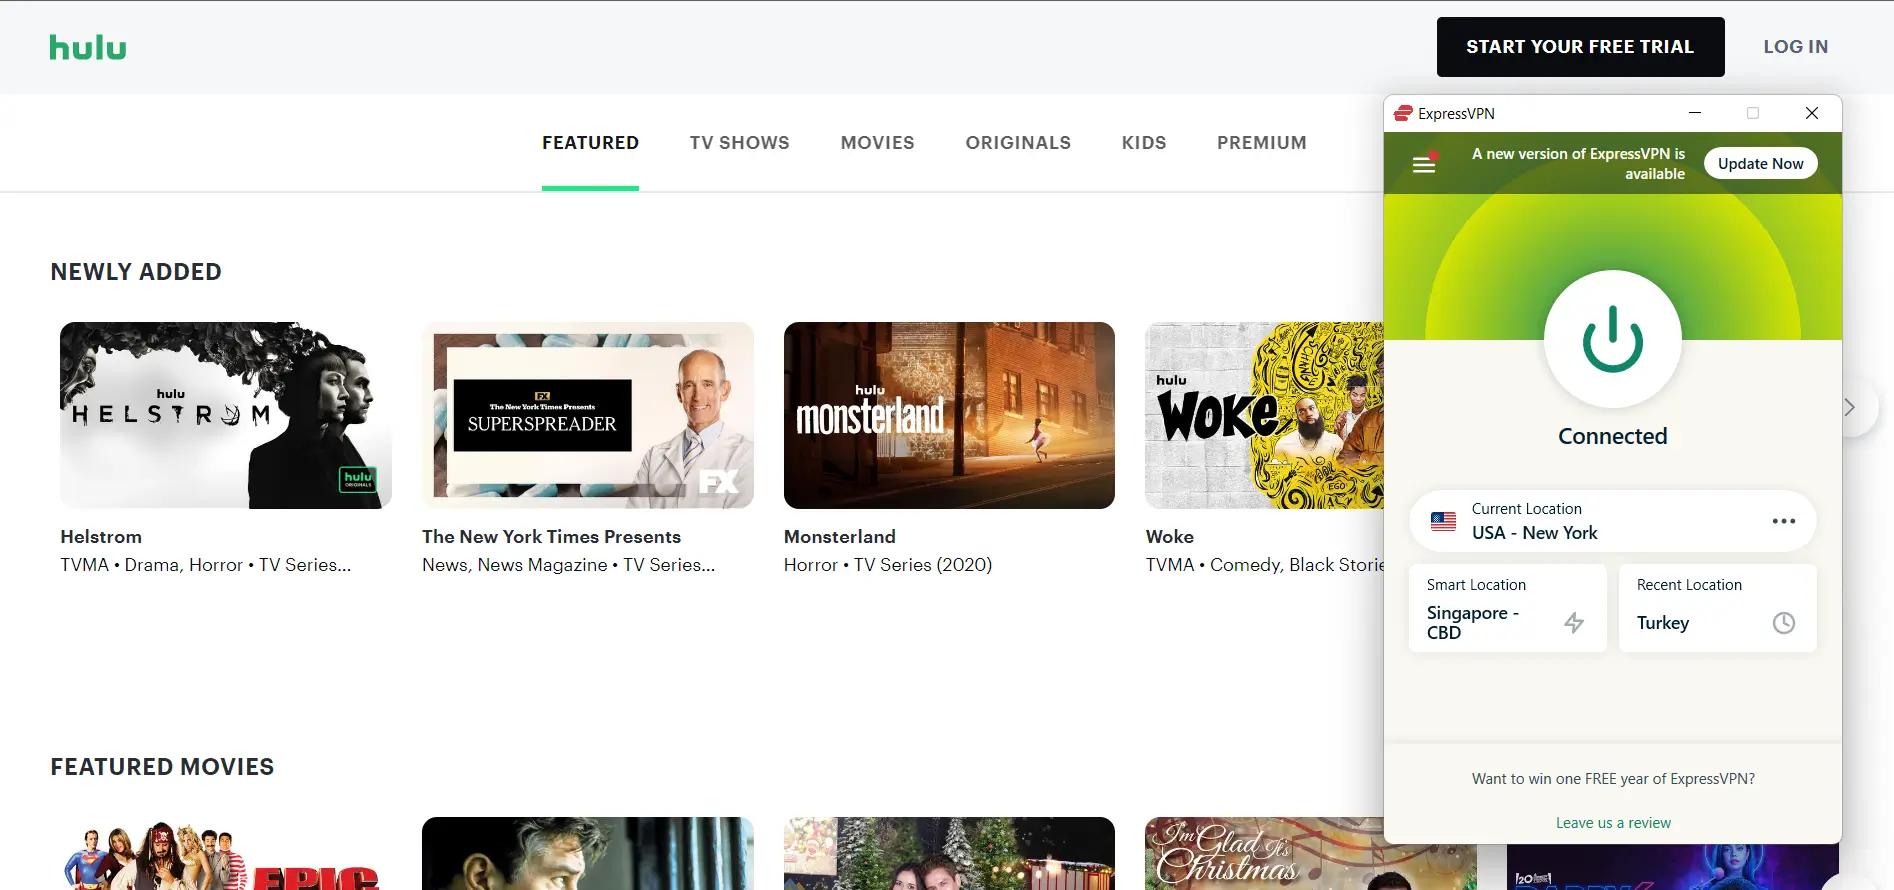 Hulu in Latvia With ExpressVPN